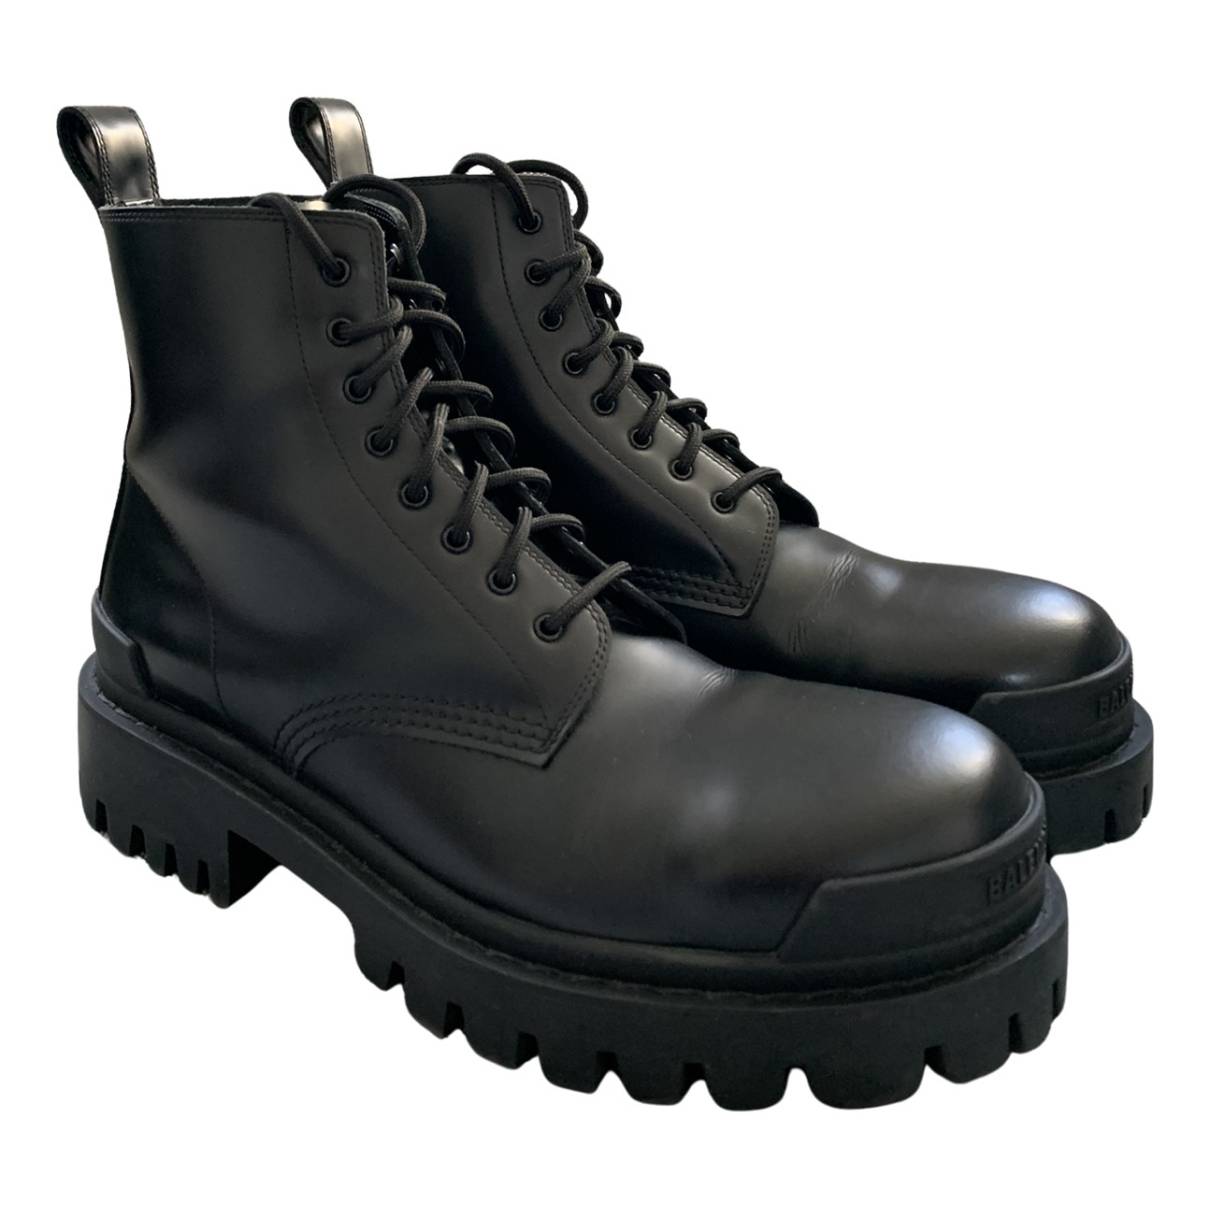 Strike leather boots Balenciaga Black size 41 EU in Leather - 29896486